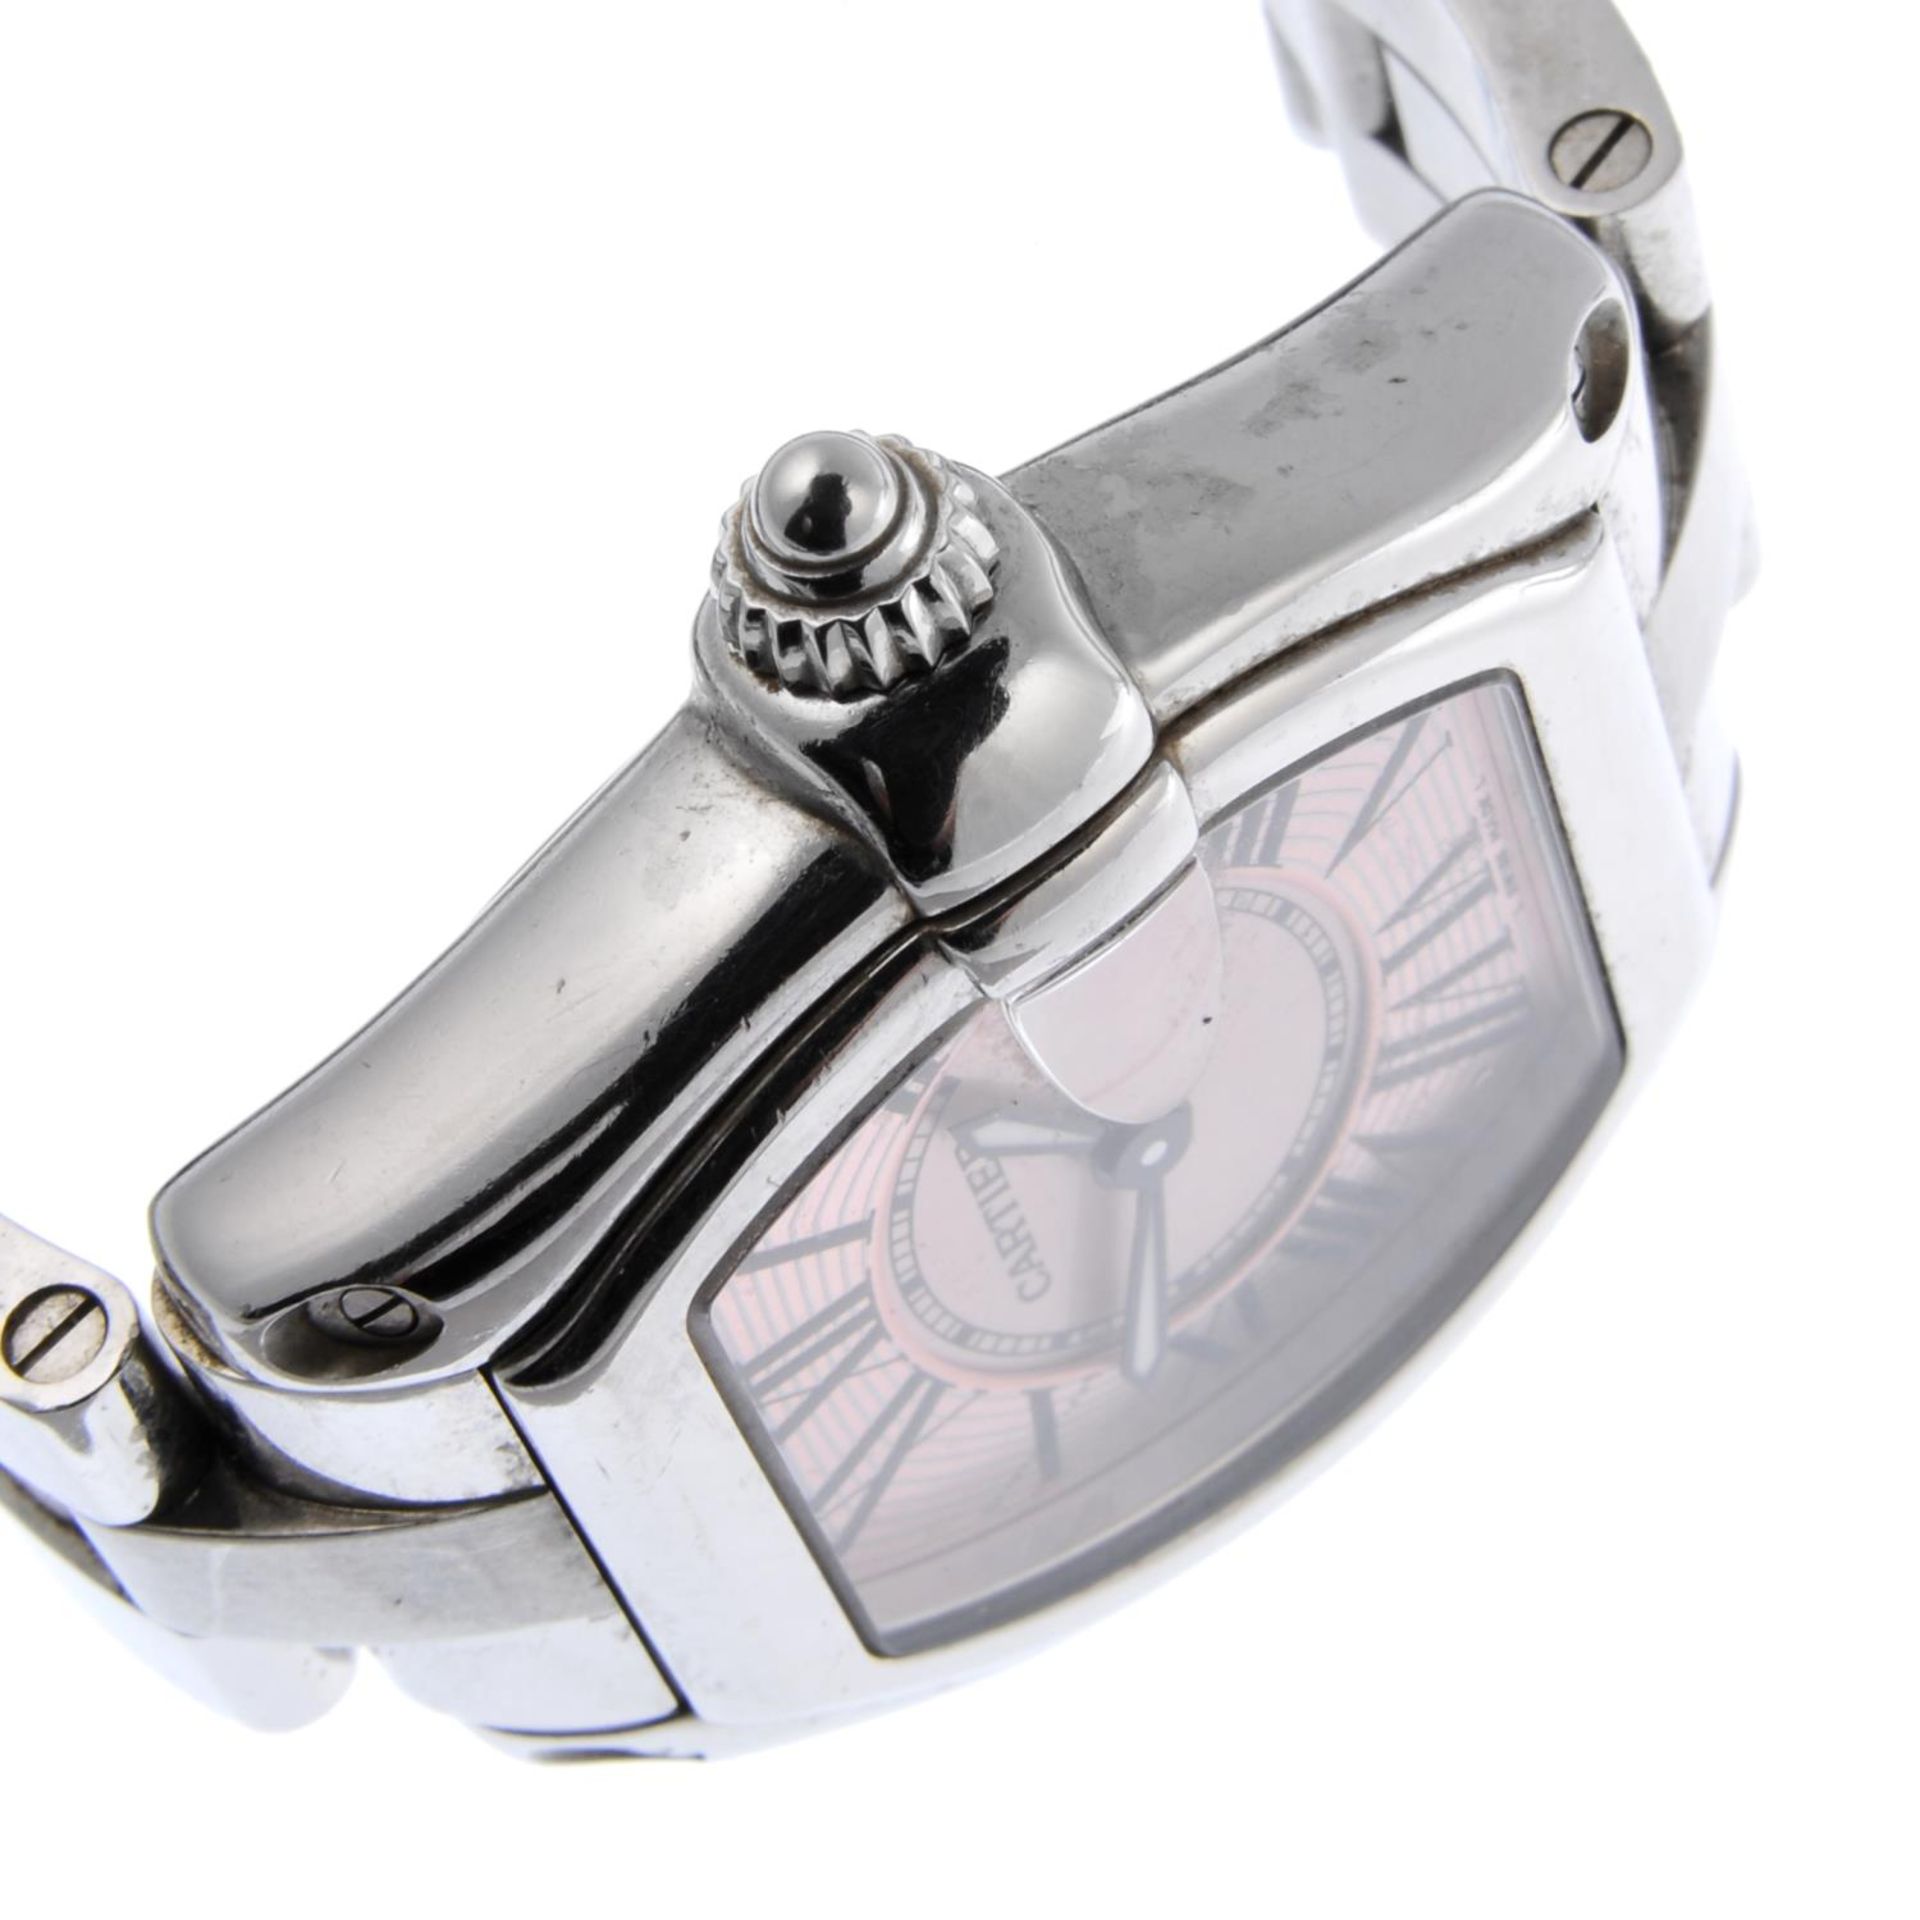 CARTIER - a lady's Roadster bracelet watch. - Image 3 of 4